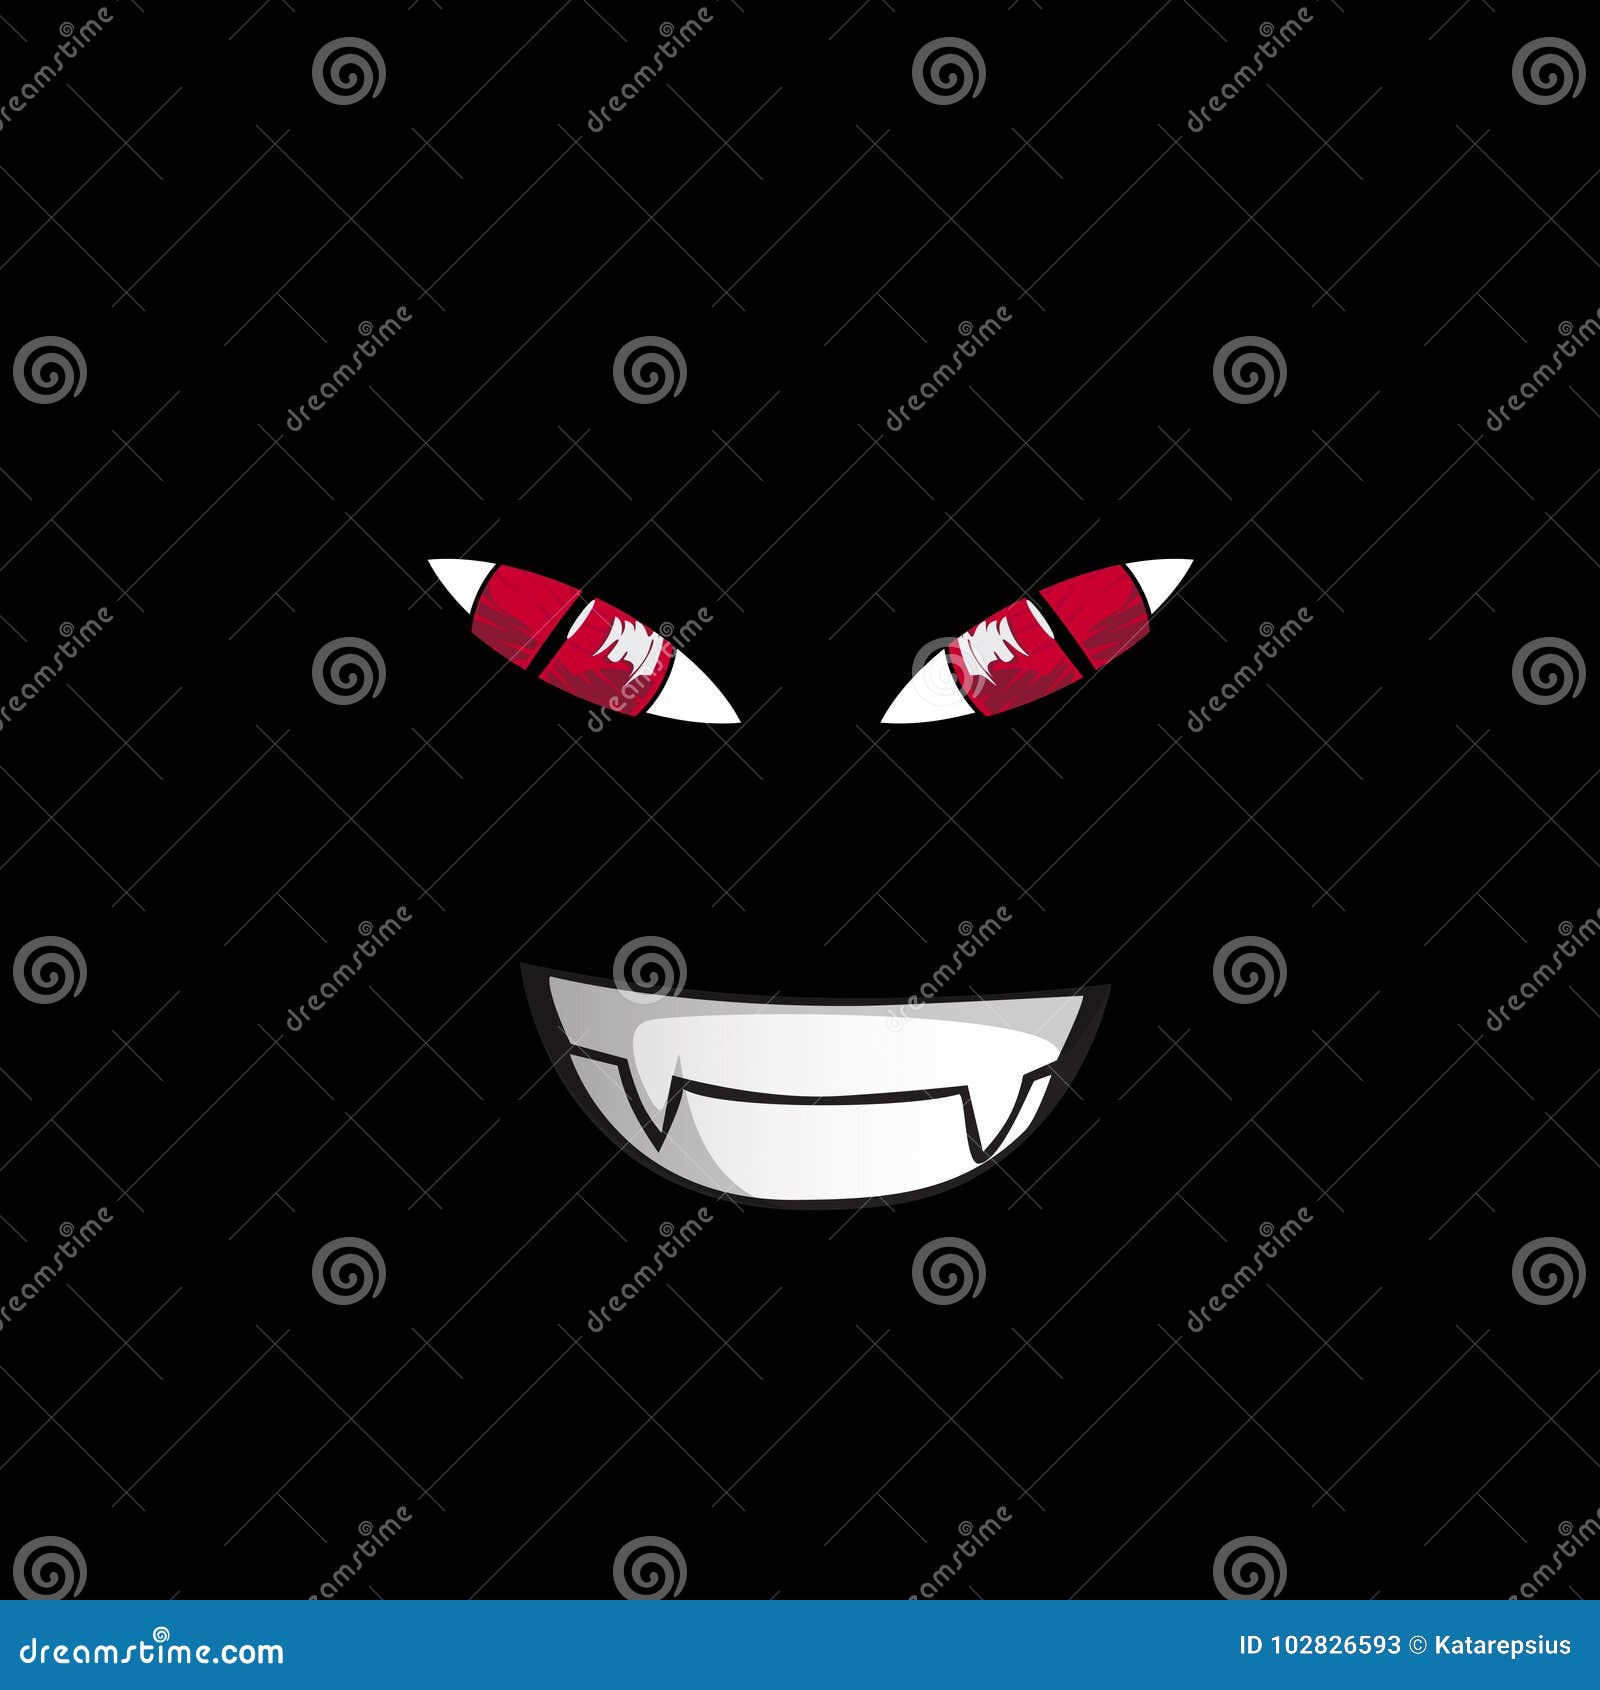 monster face on black background. red screwed-up predatory eyes